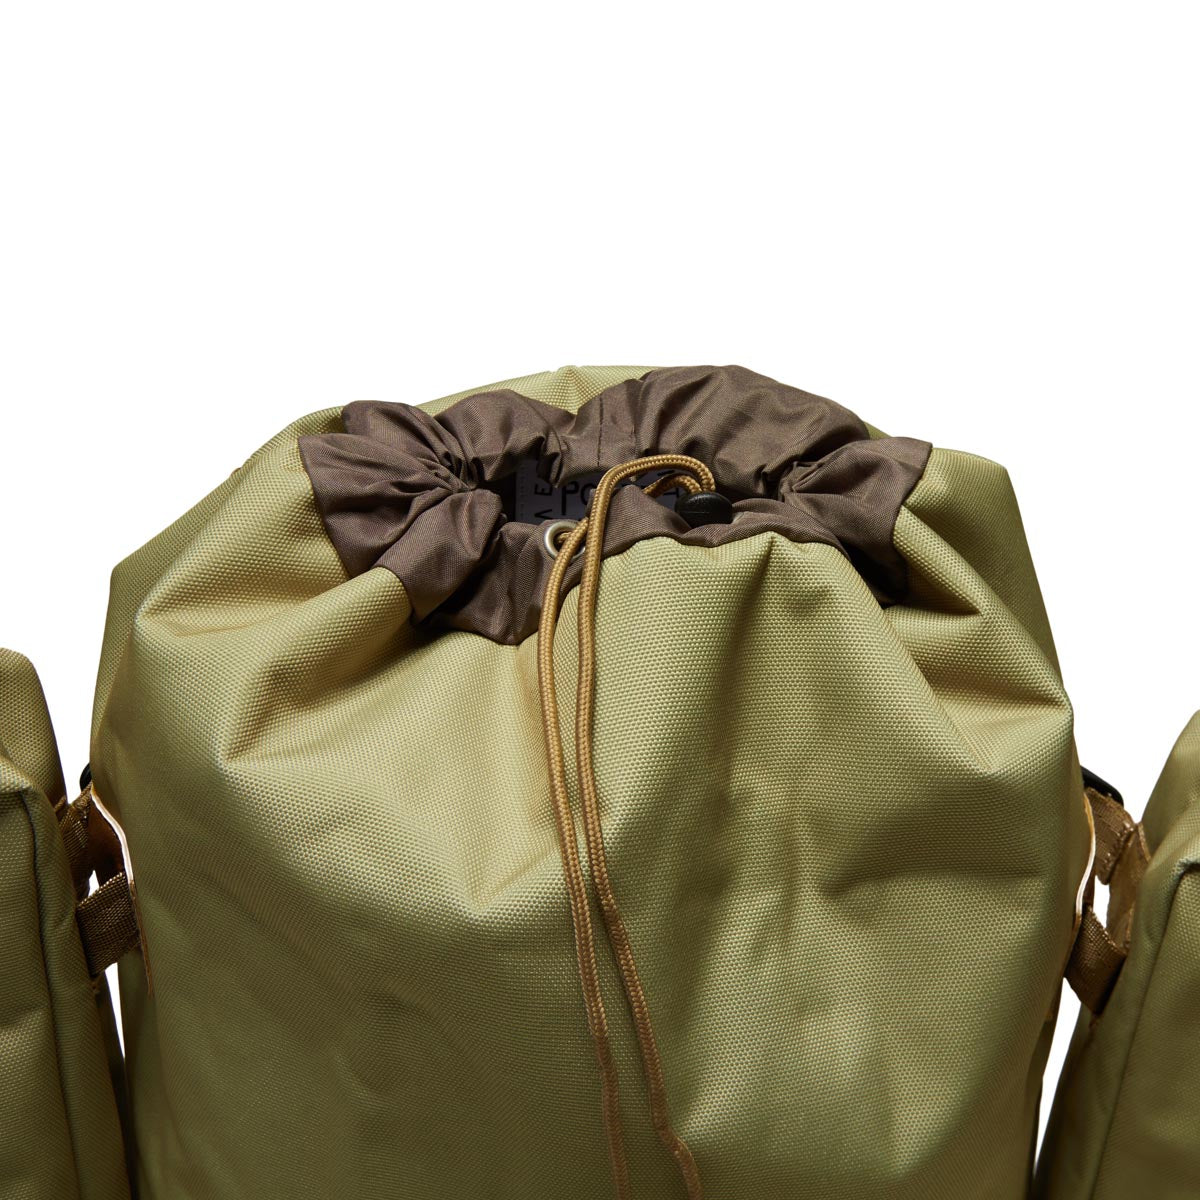 Poler Classic Rucksack Backpack - Khaki image 5